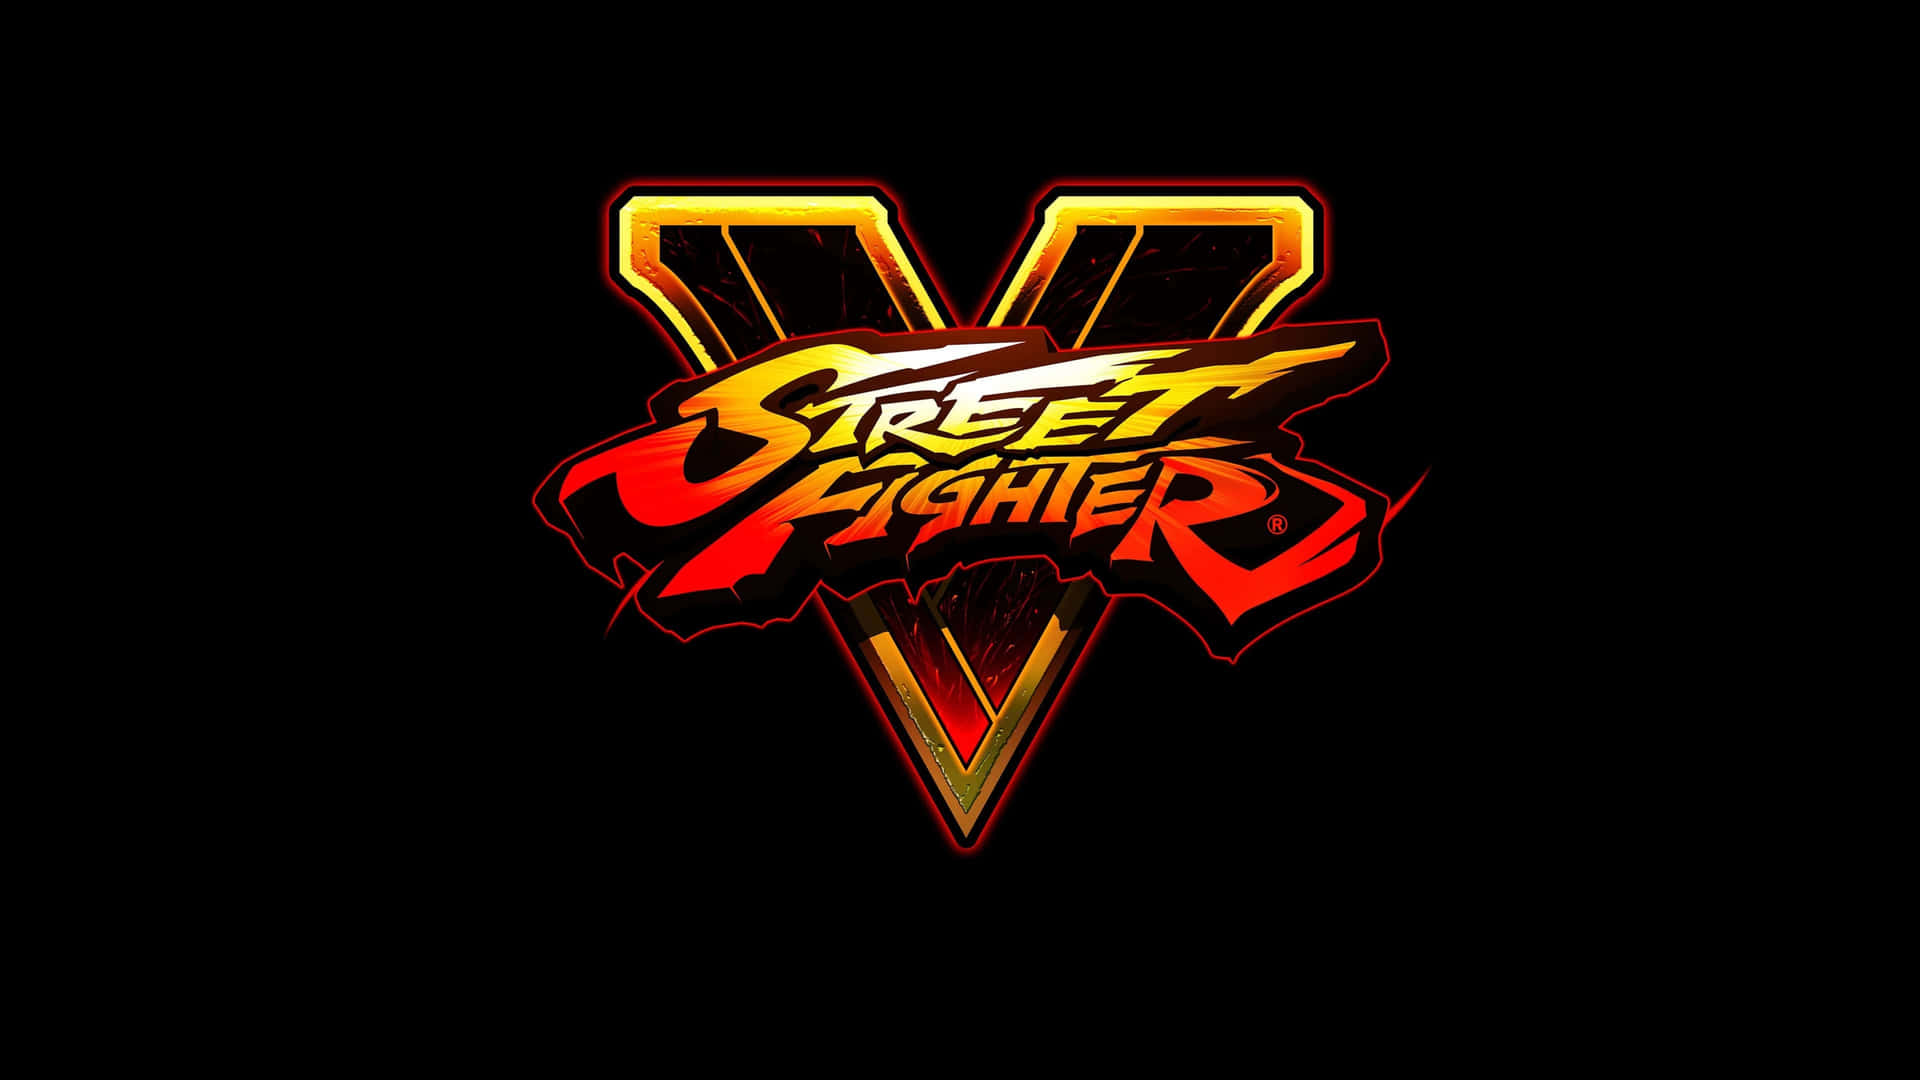 V Street Fighter 4k Logo Wallpaper